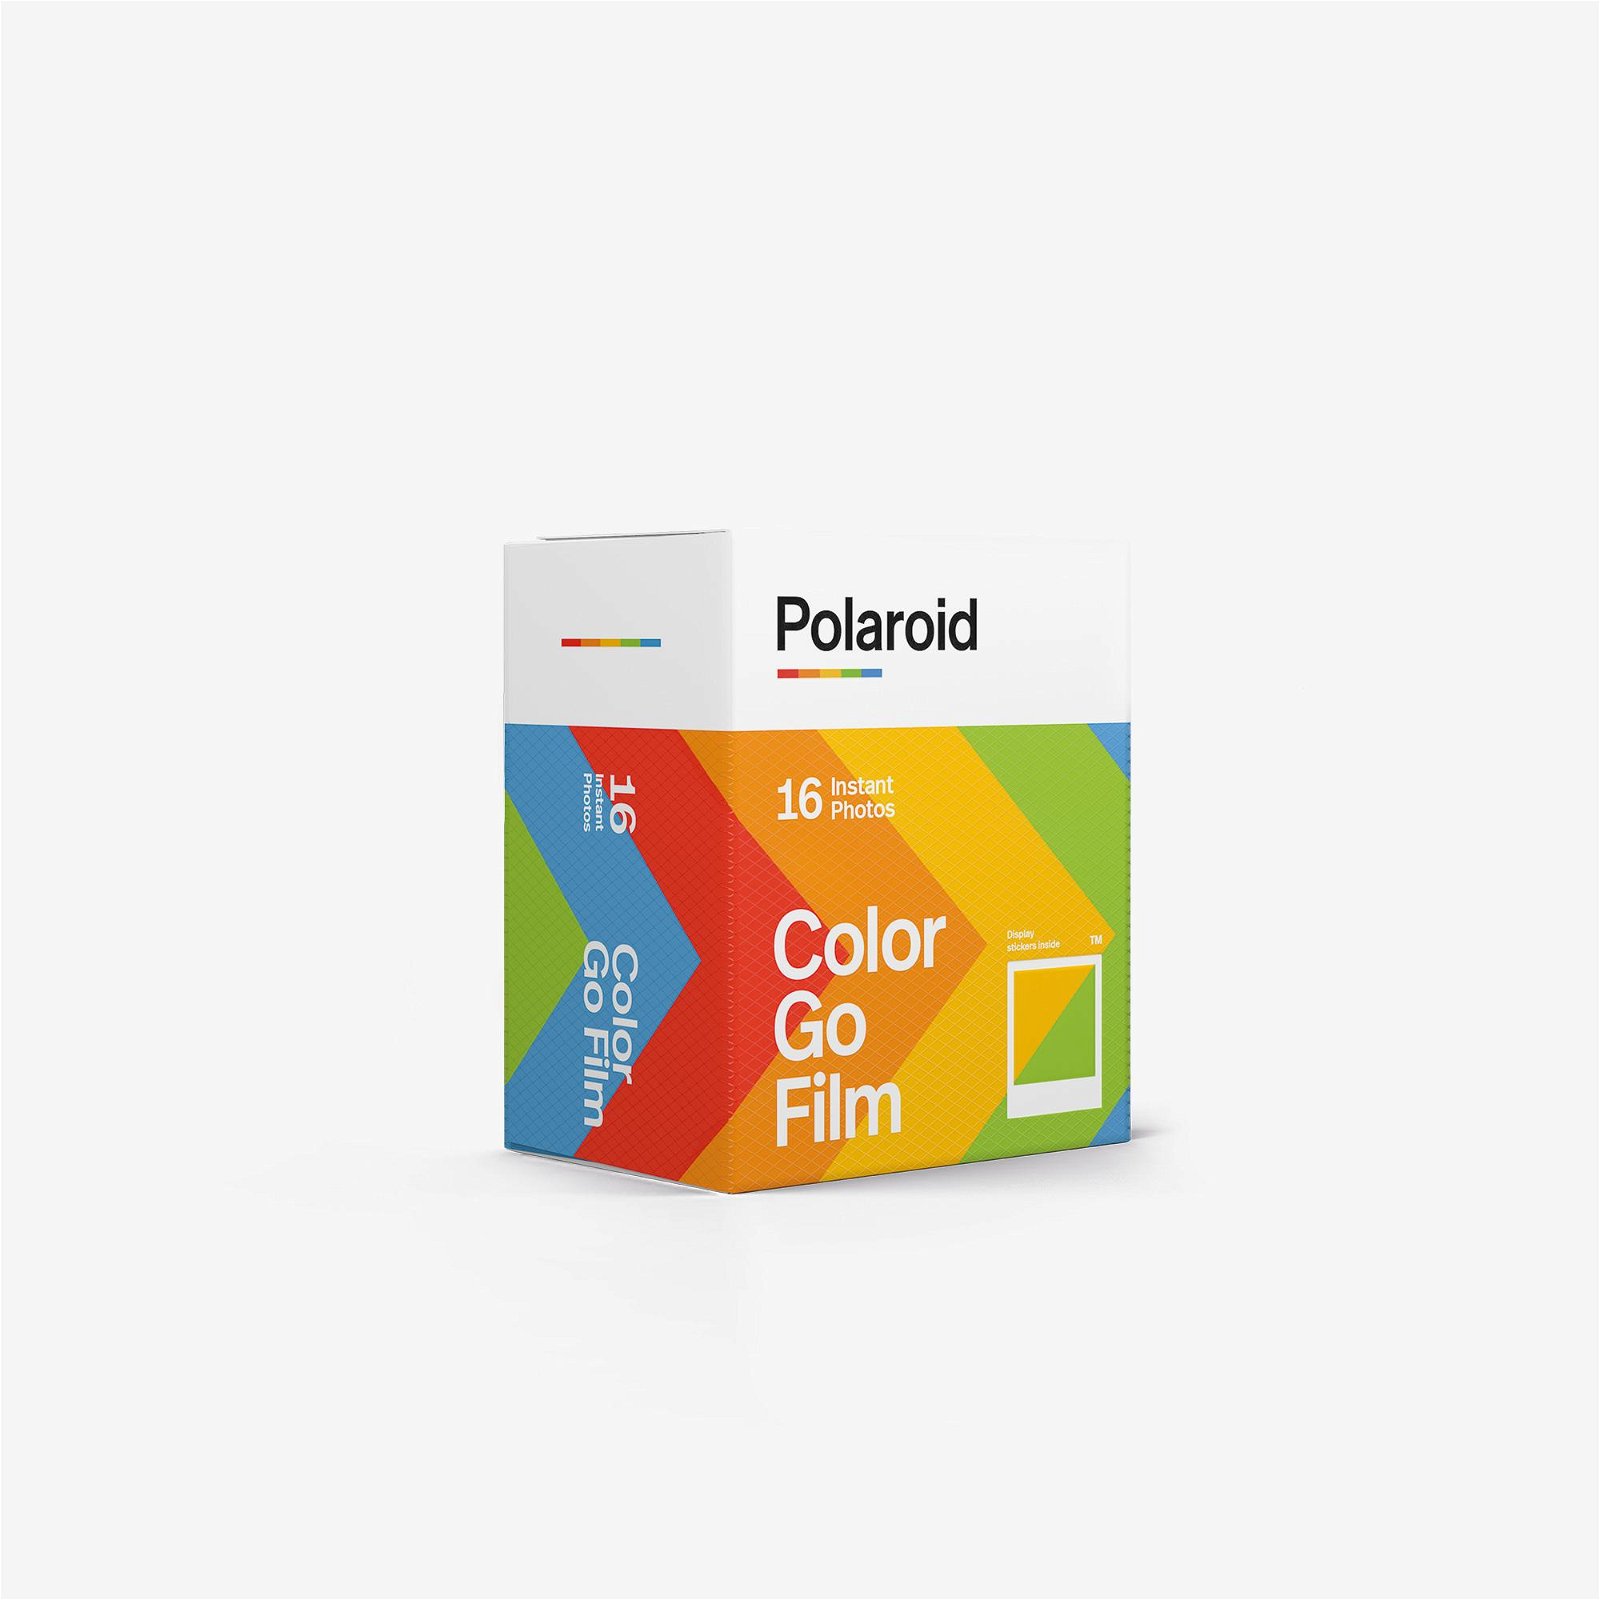 Polaroid Go Intant film